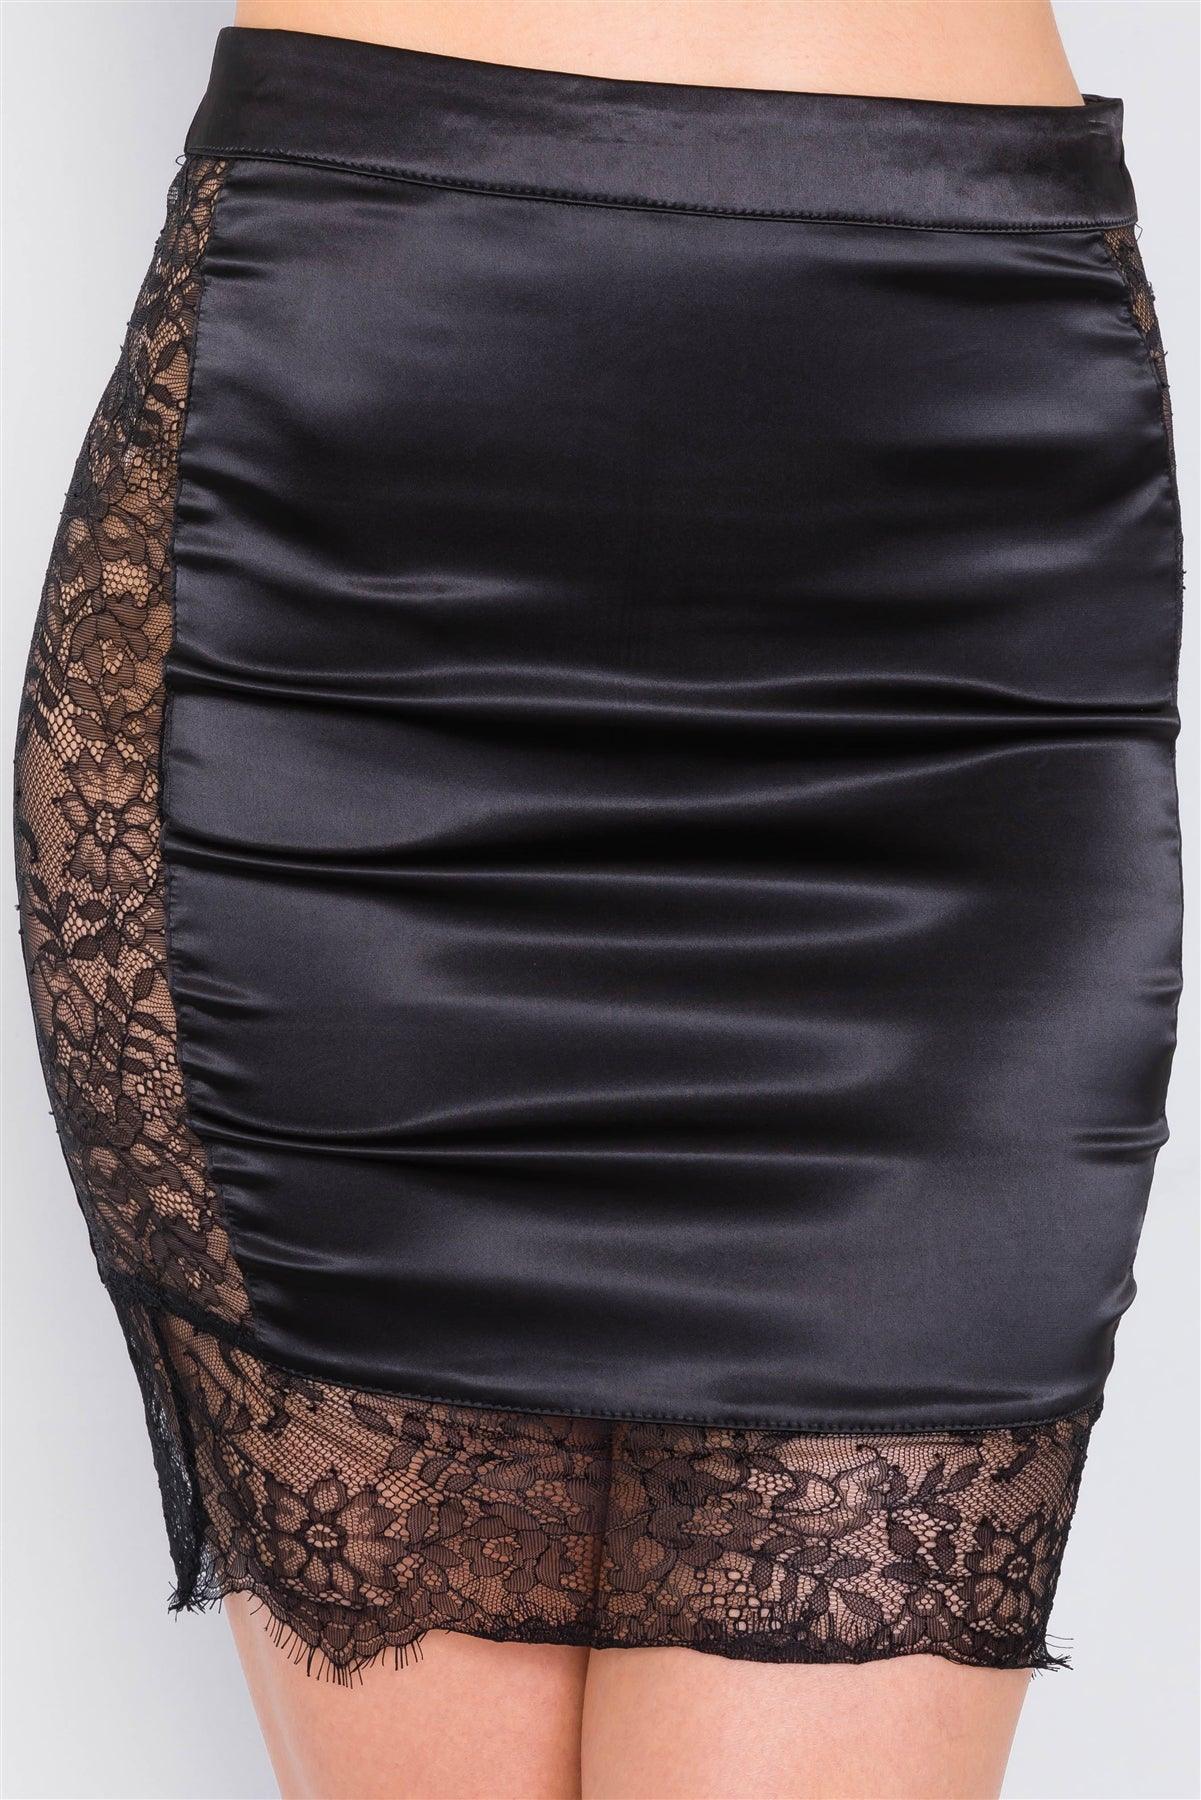 Black Satin Lace Nylon Cut Out Side Chic Mini Skirt /2-2-2